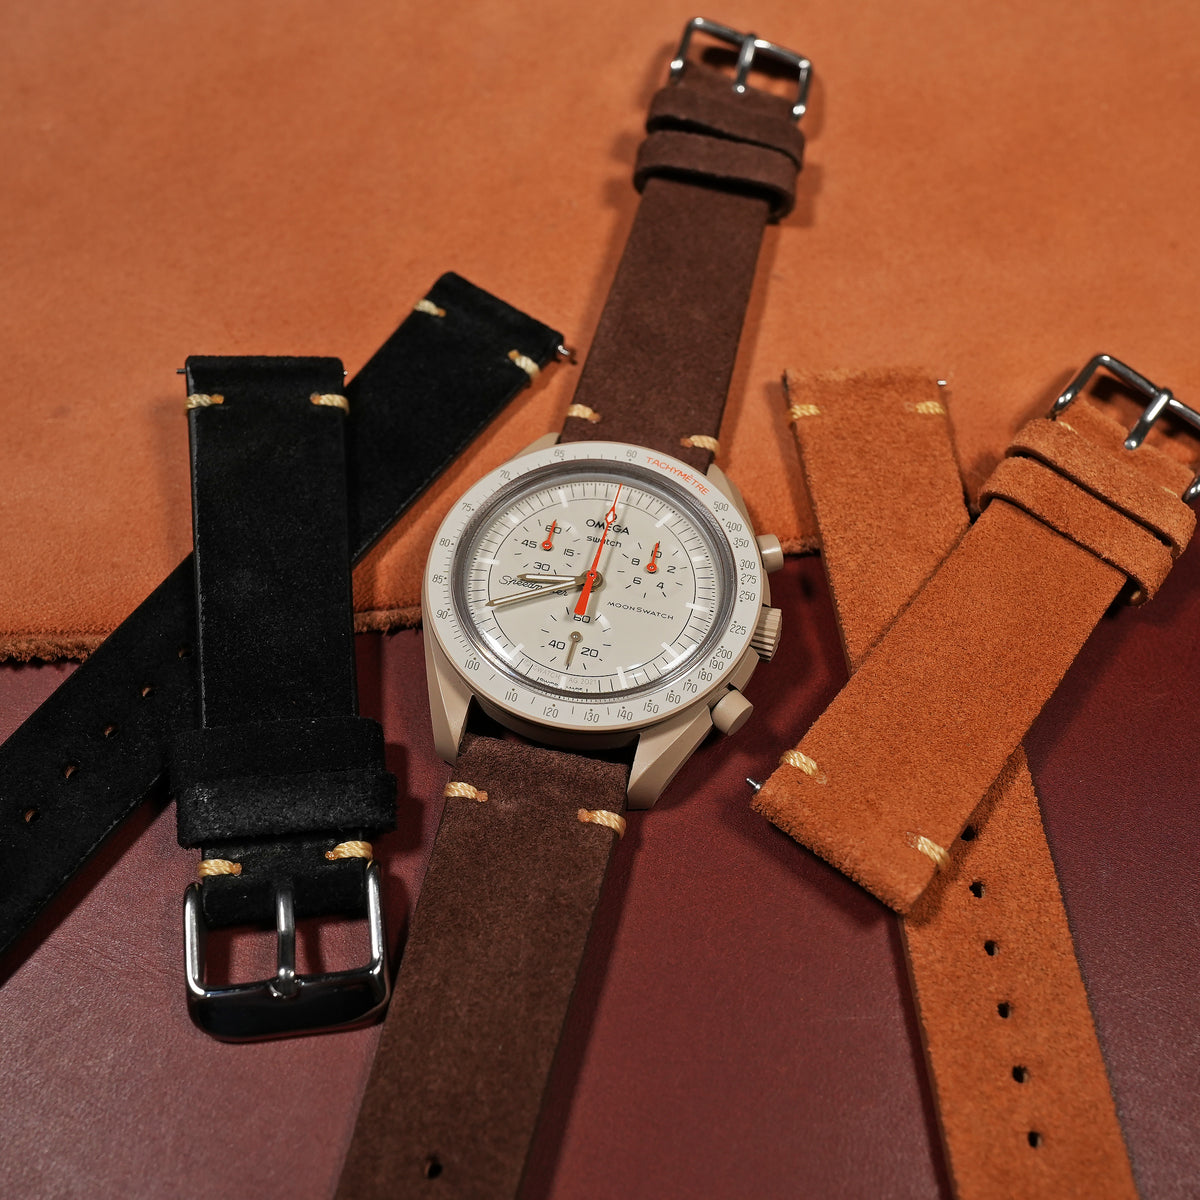 Premium Vintage Suede Leather Watch Strap in Brown - Nomad Watch Works SG